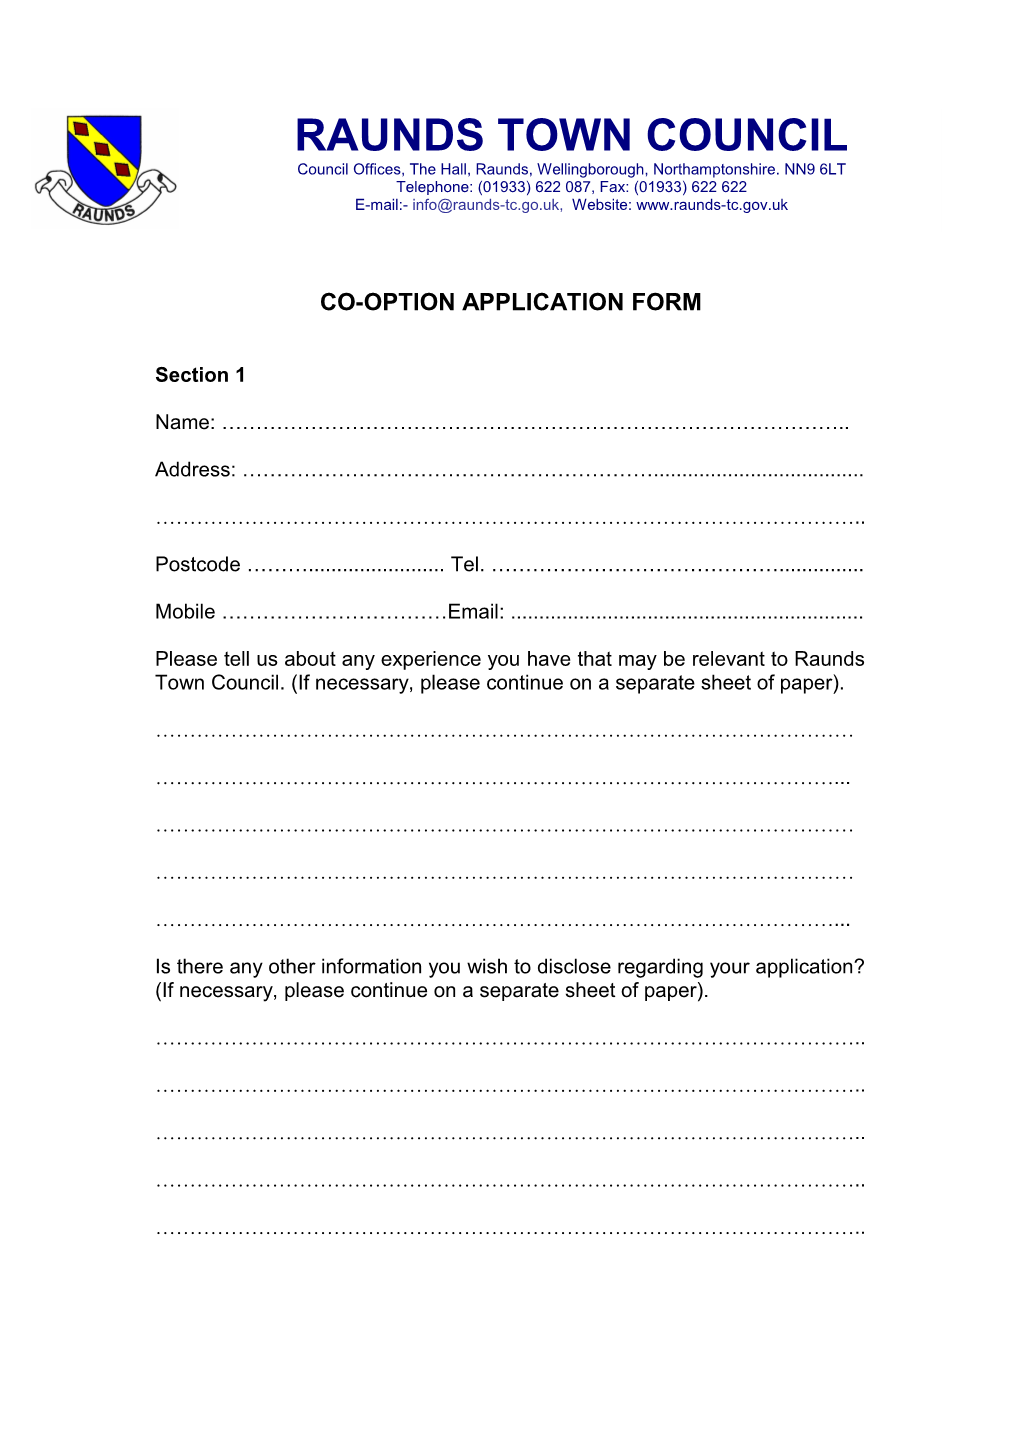 Co-Option Application Form